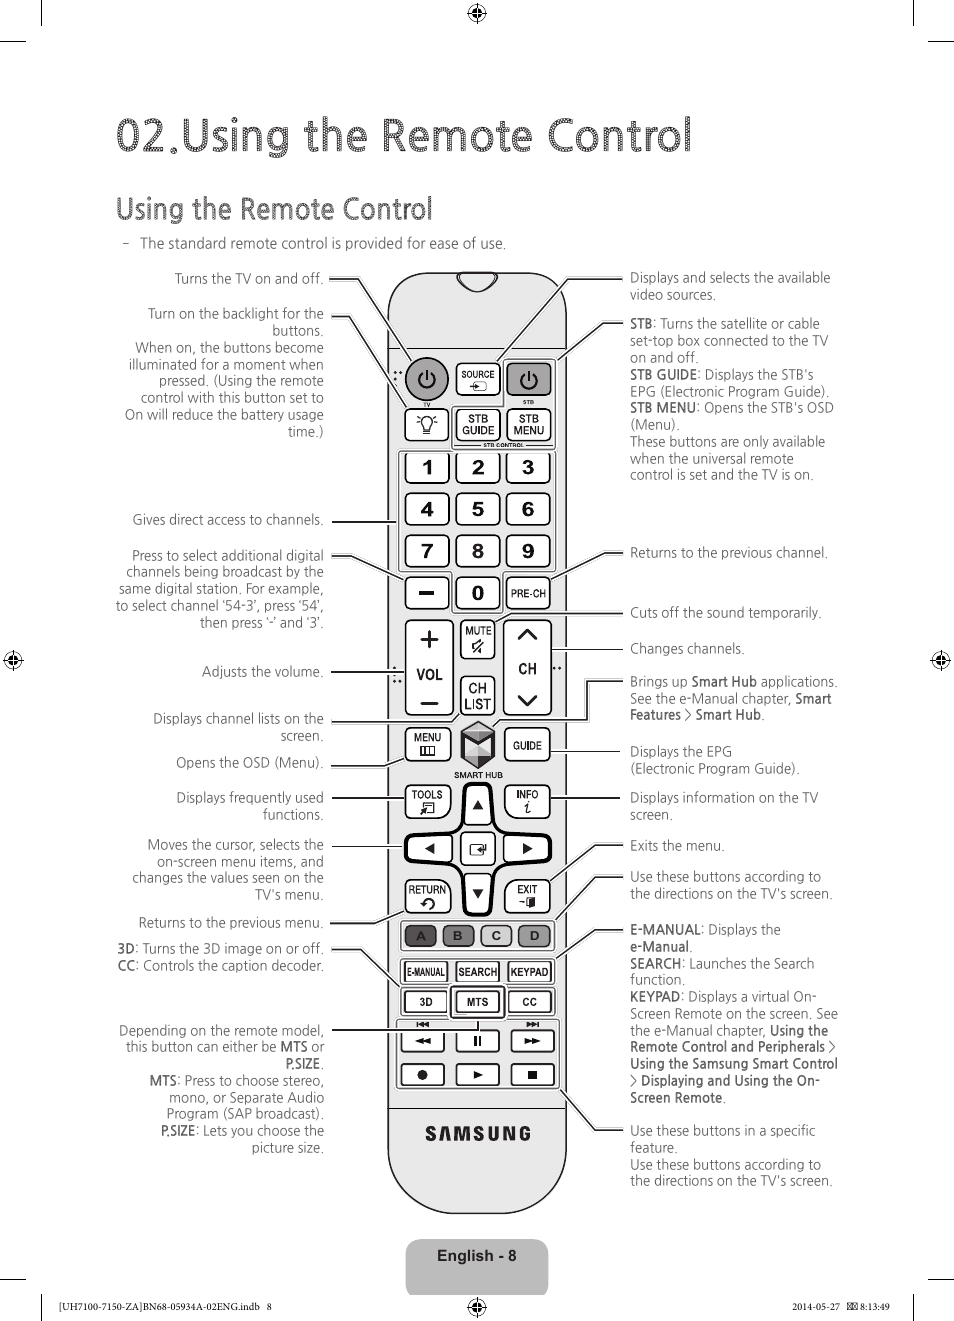 Using the remote control | Samsung UN55H7150AFXZA User Manual | Page 8 / 40